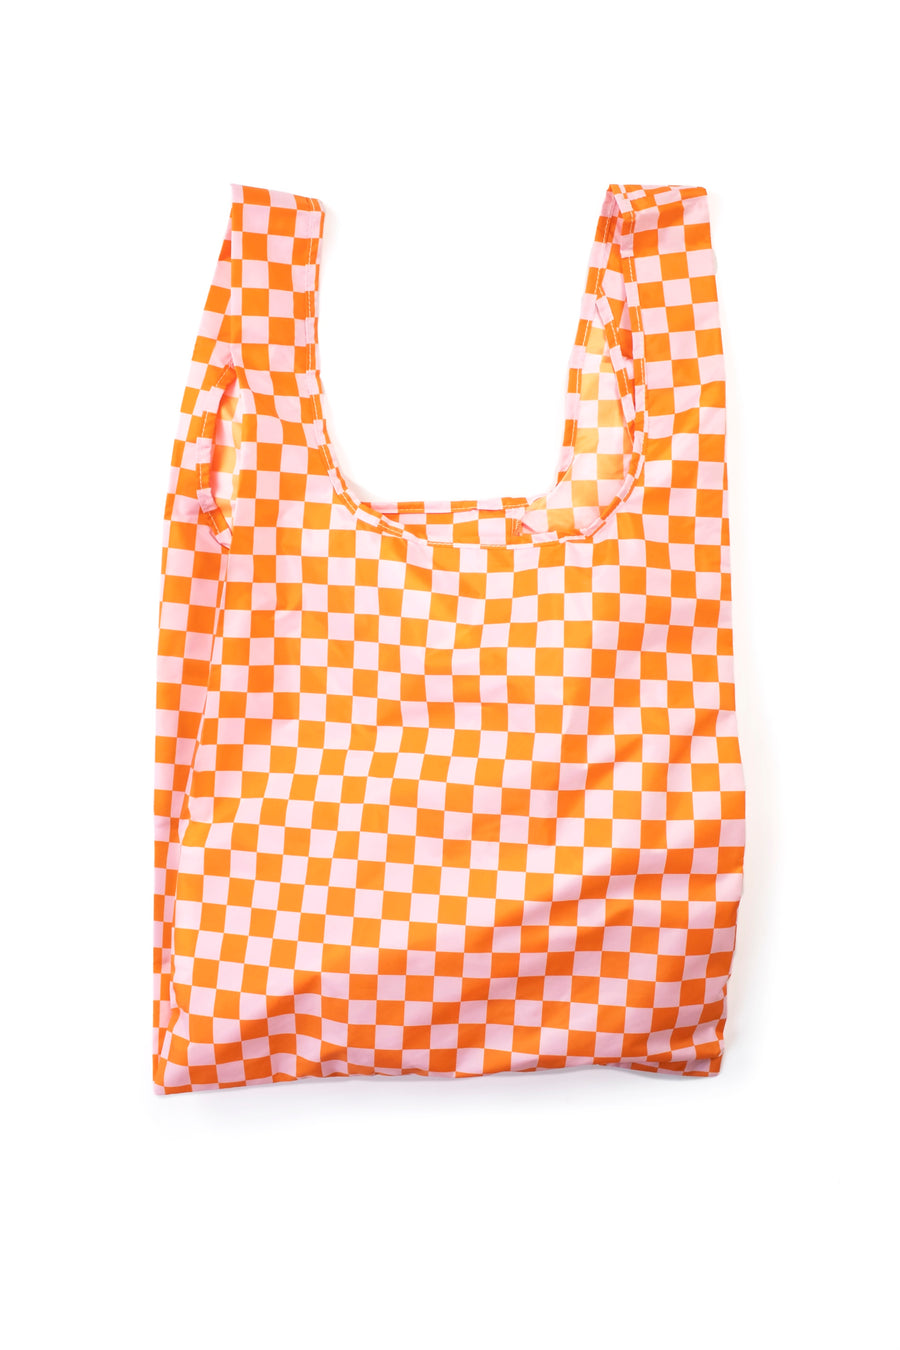 Kind Bag Orange and Pink Checkerboard Medium Reusable Bag Flat View